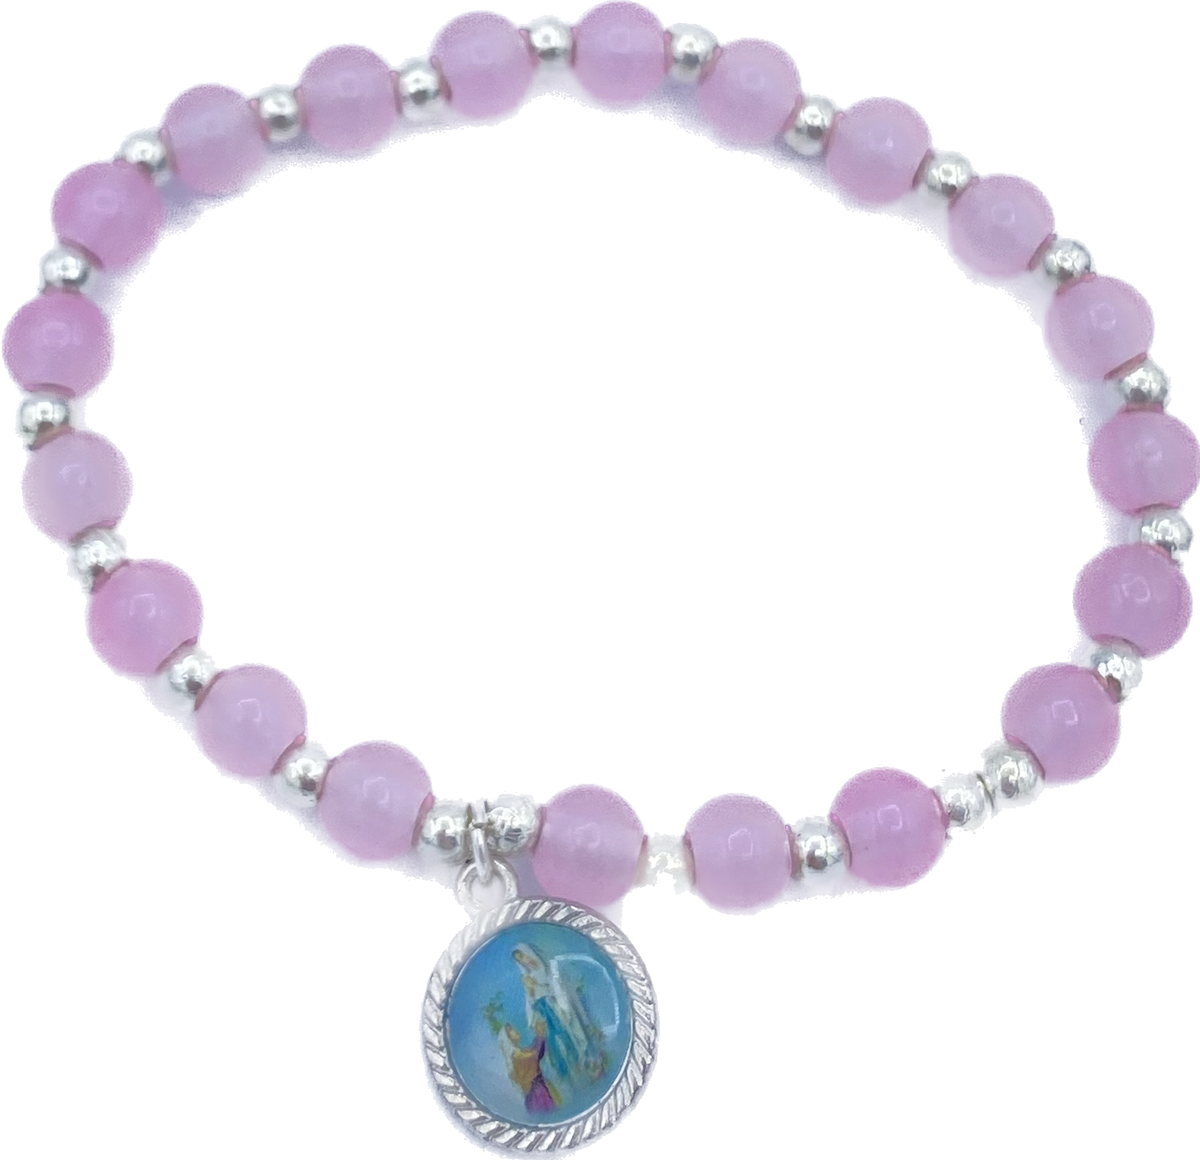 6mm glass bracelet with a pink Lourdes medal